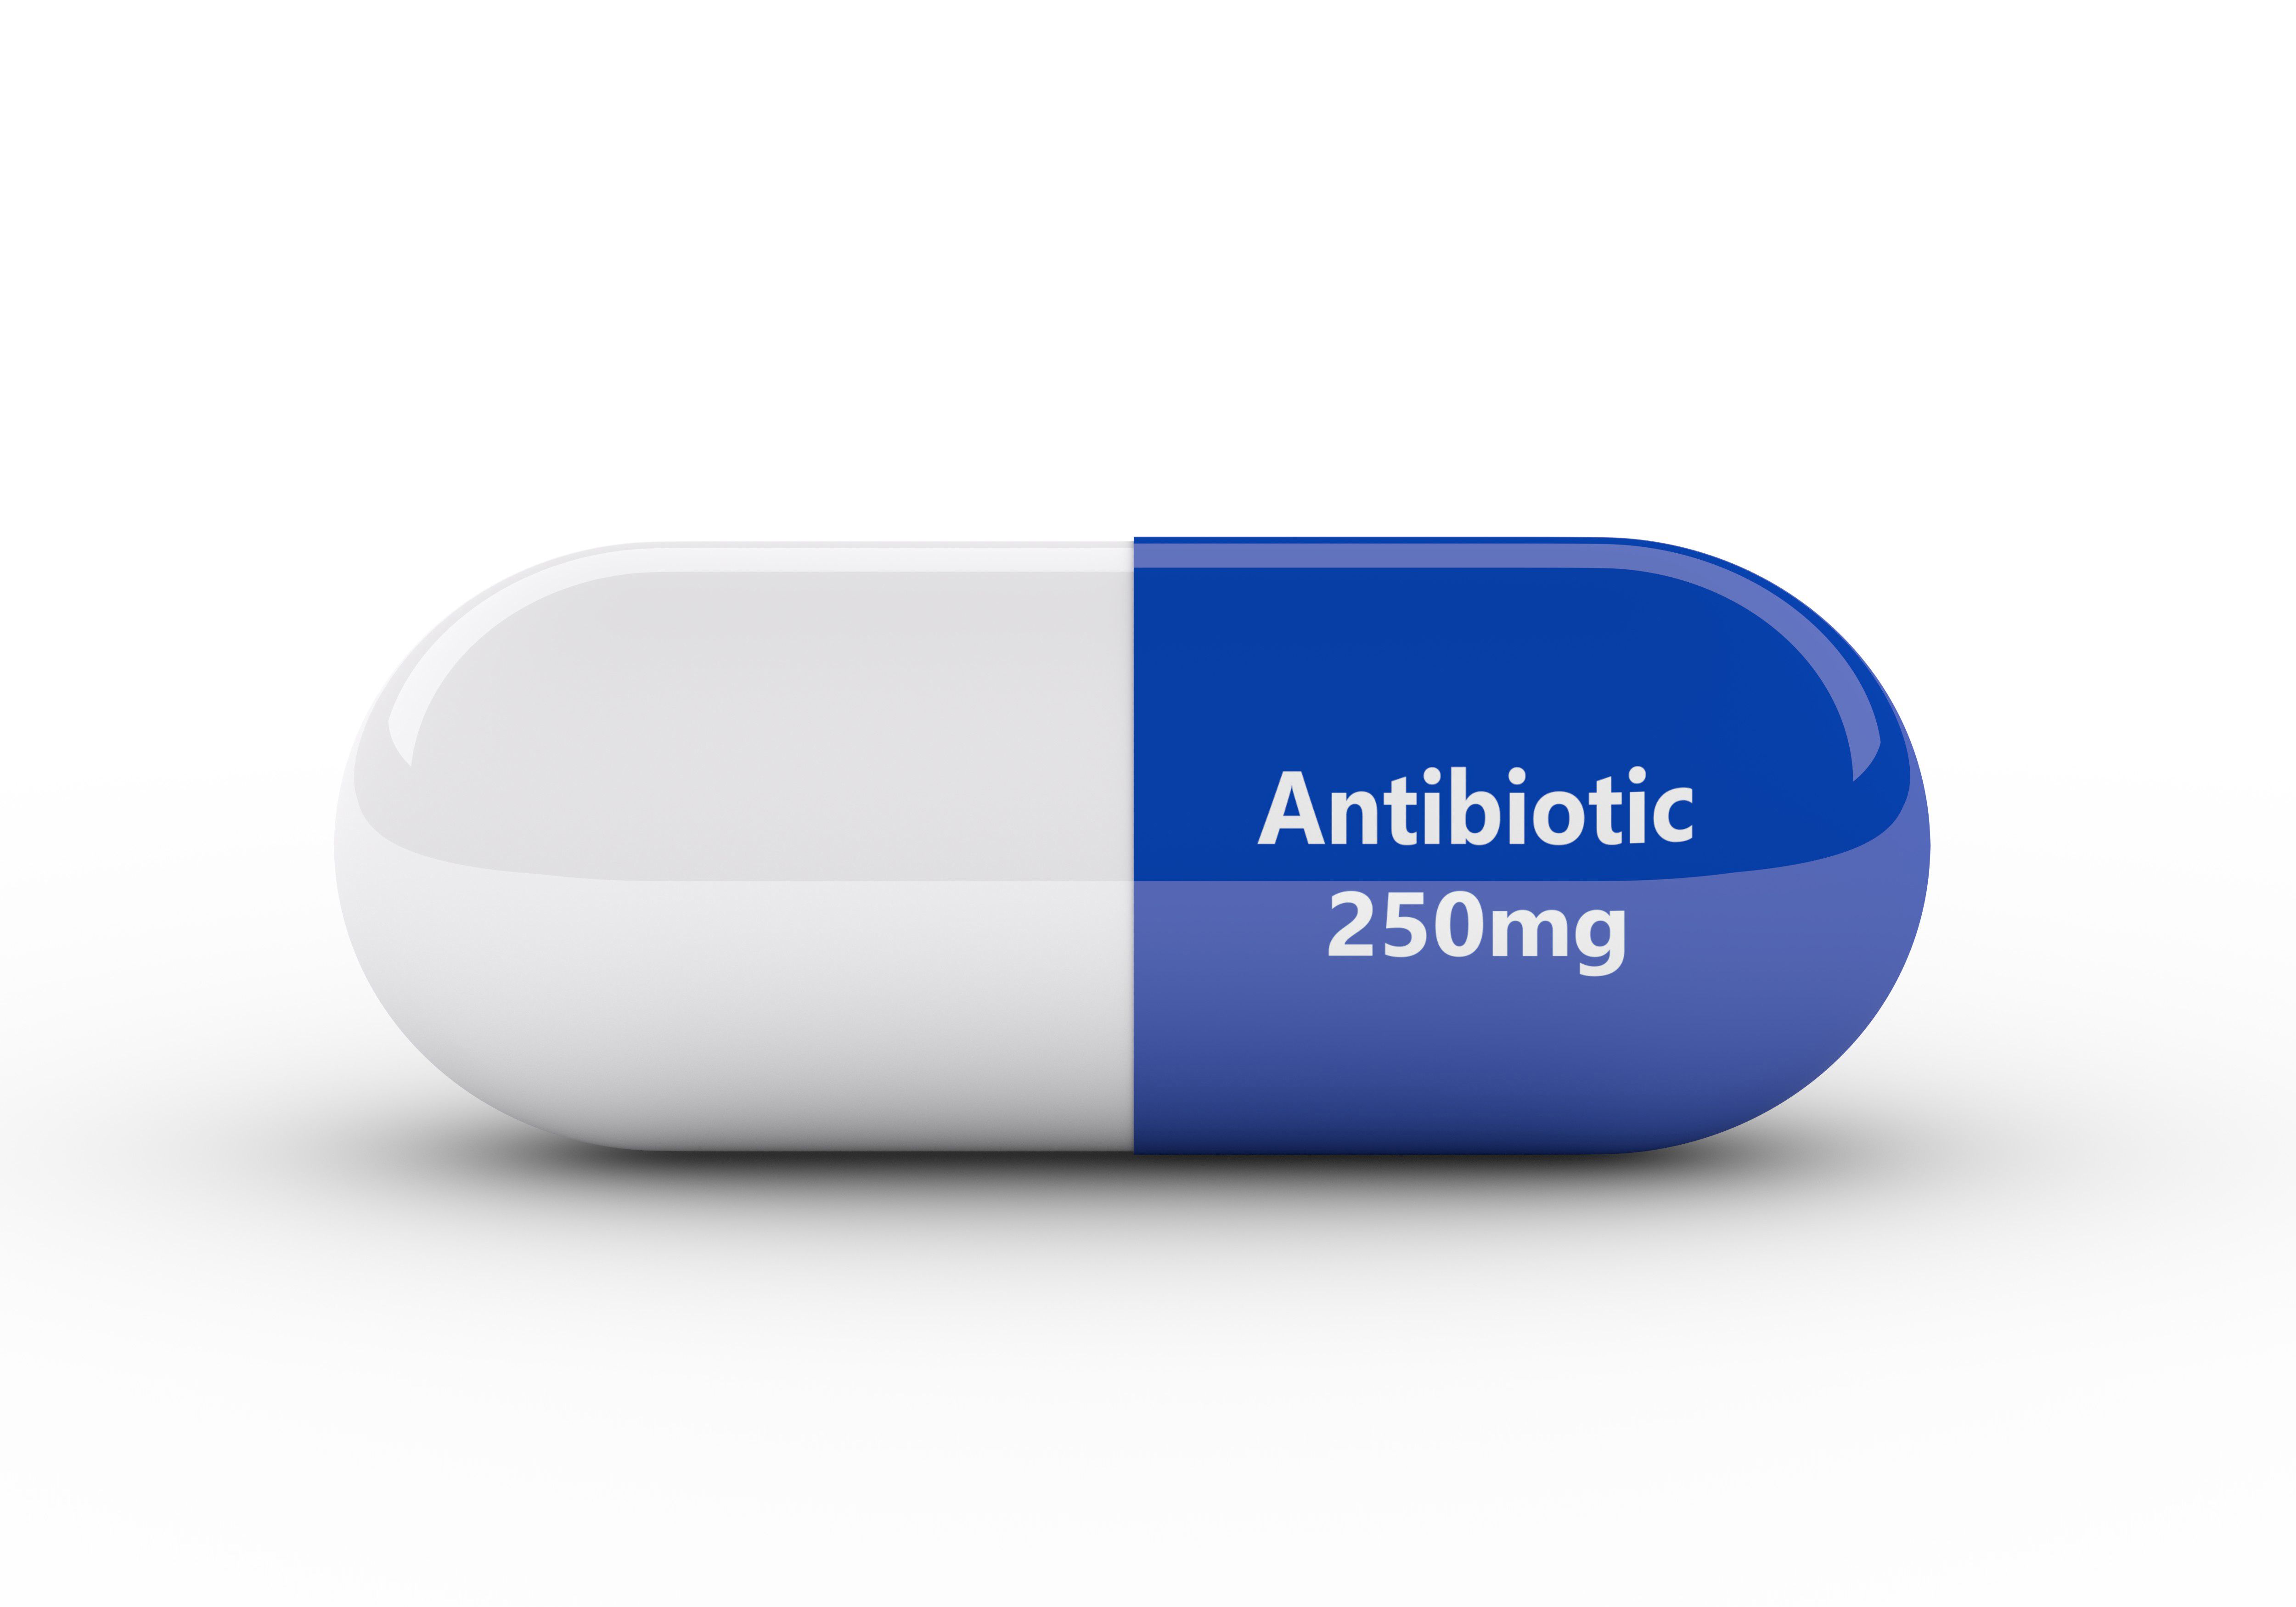 Antibiotic Use Increases Rheumatoid Arthritis Risk